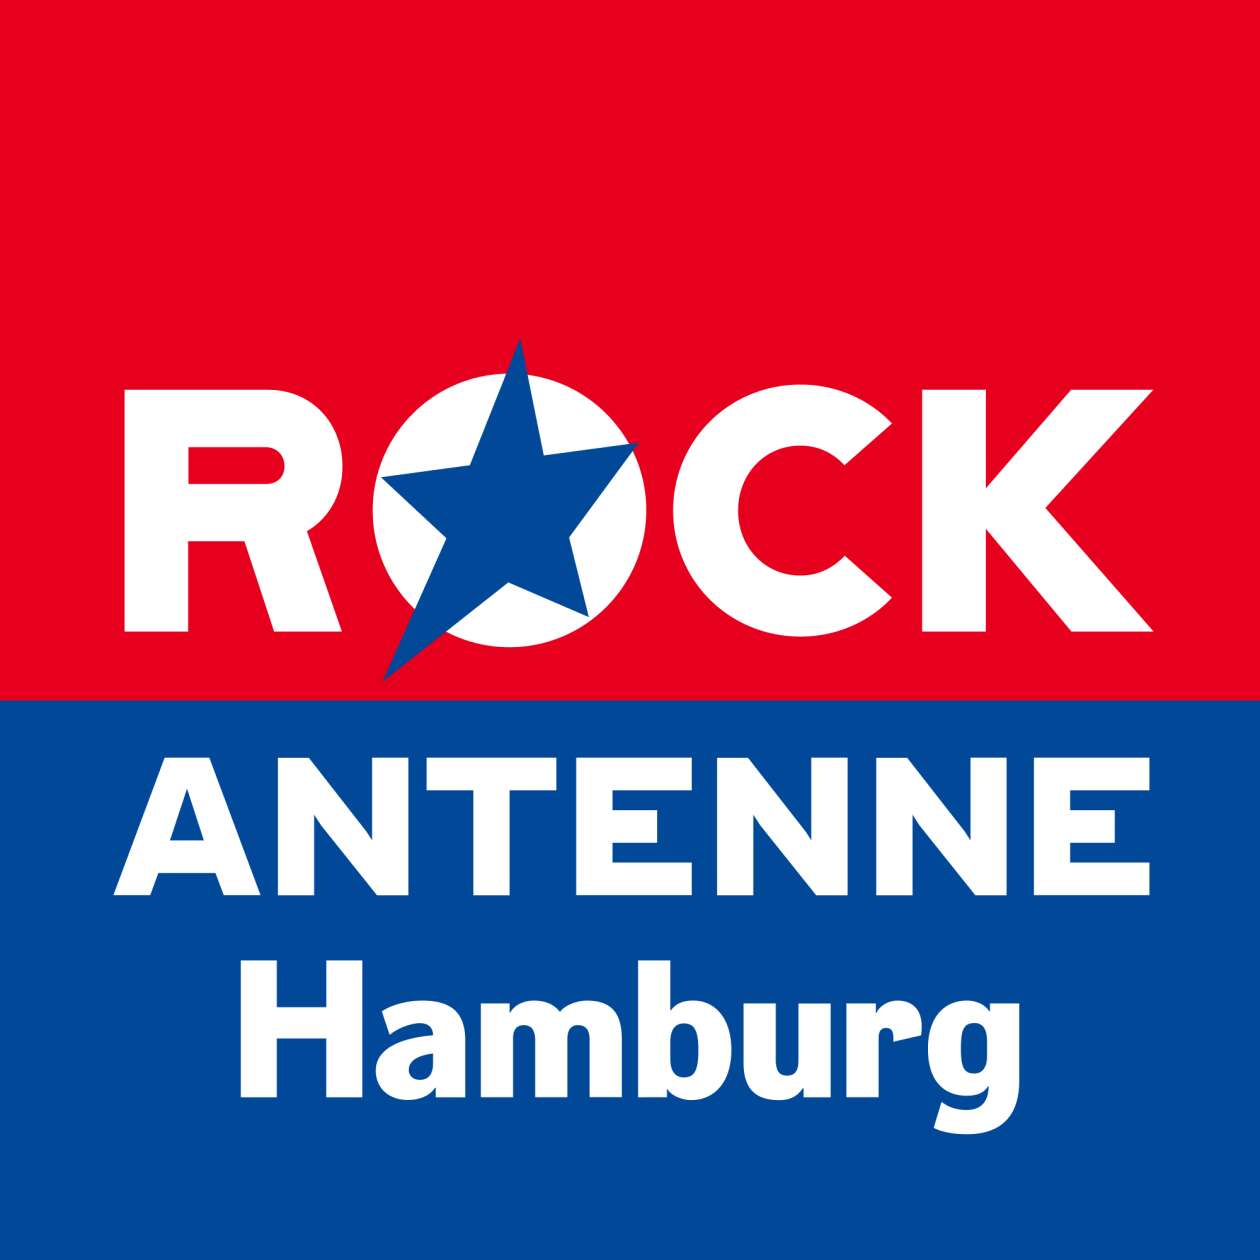 www.rockantenne.hamburg